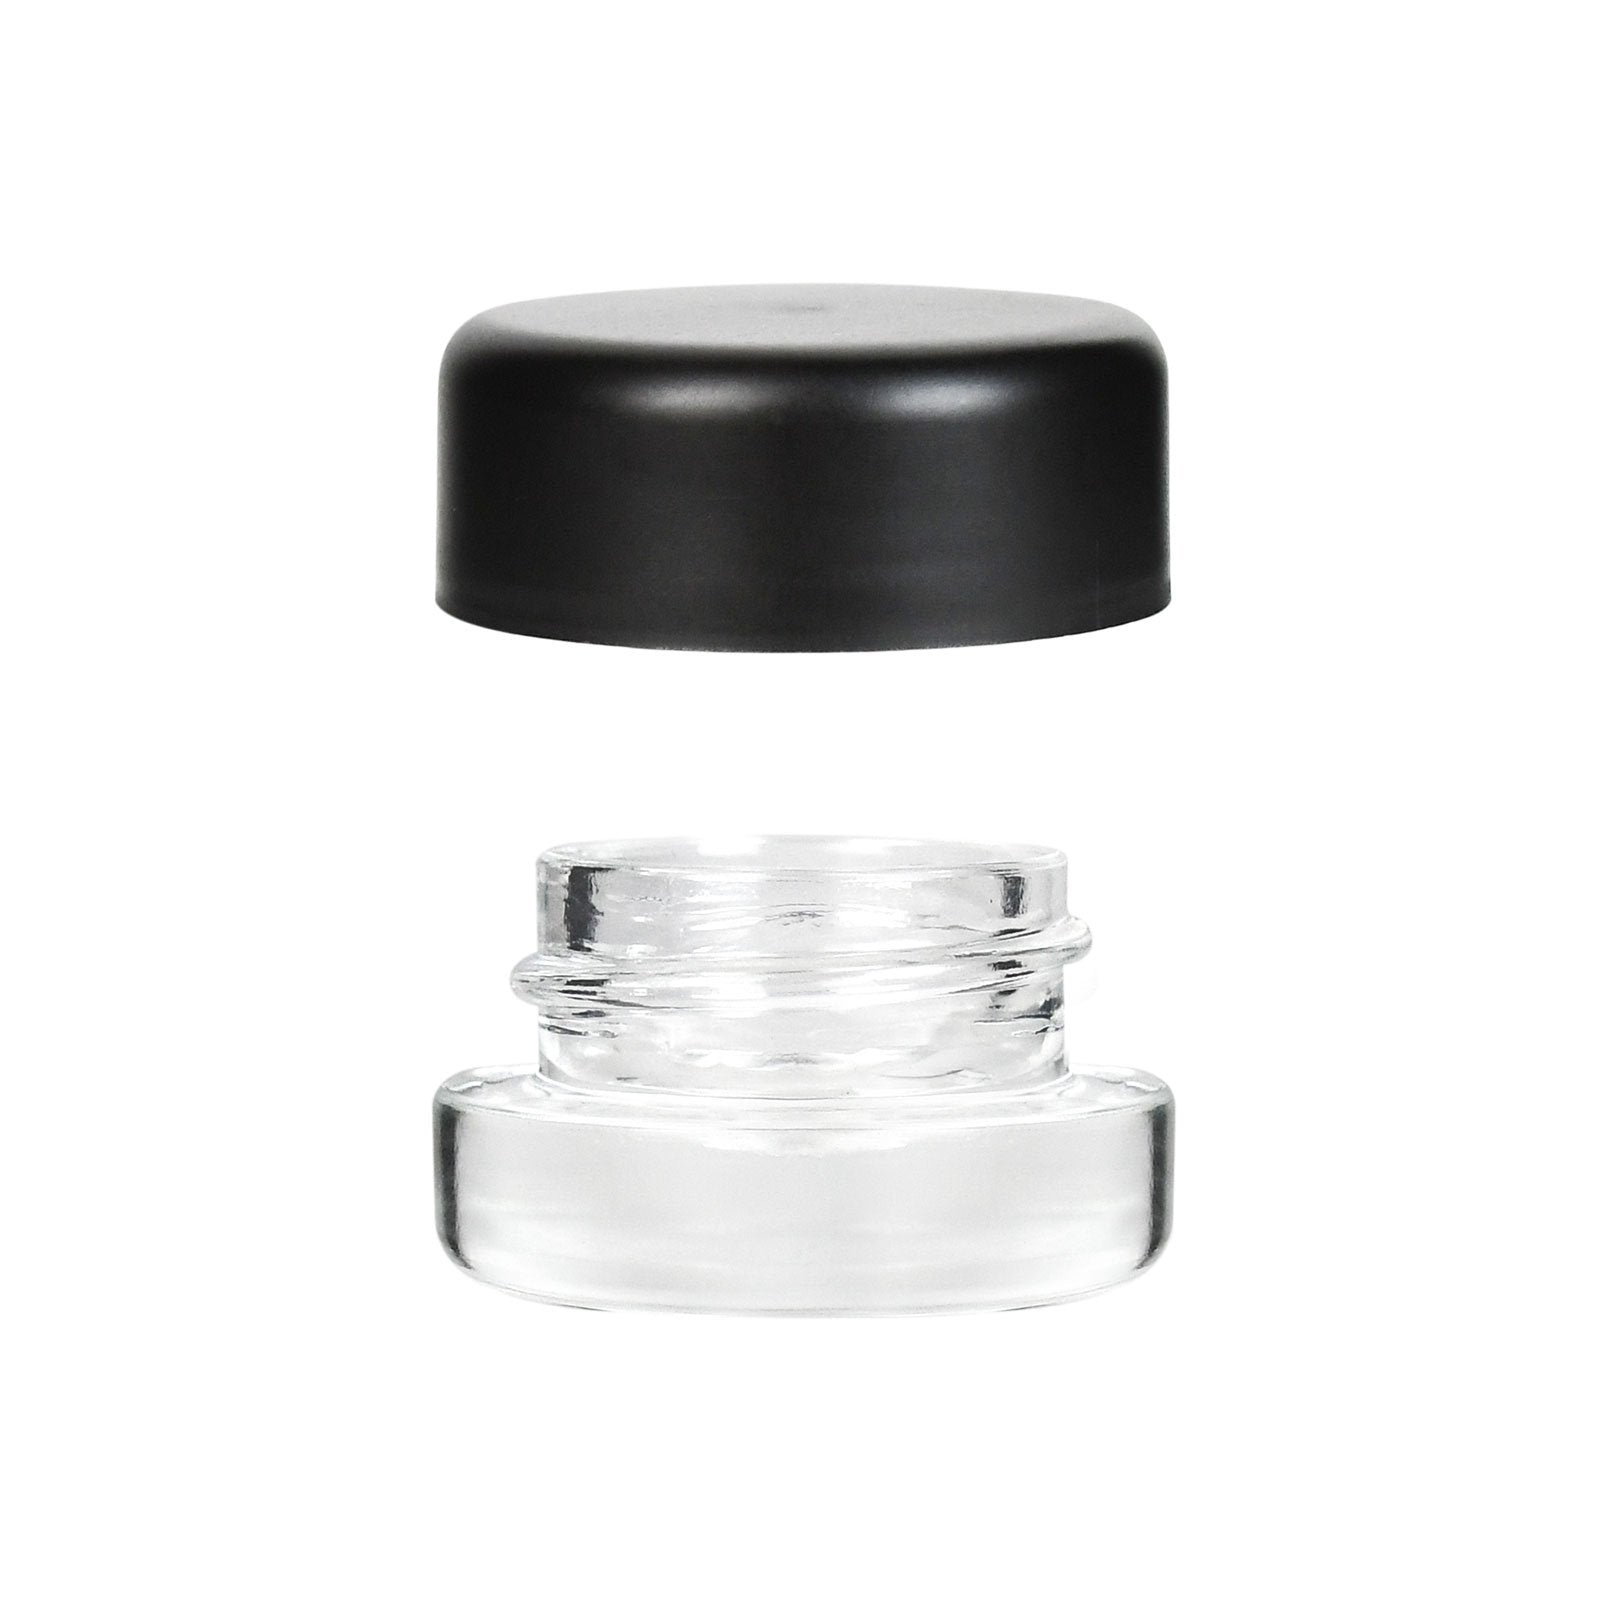 5ml Child Resistant Glass Jar With Black Cap - 1 Gram - 320 Count